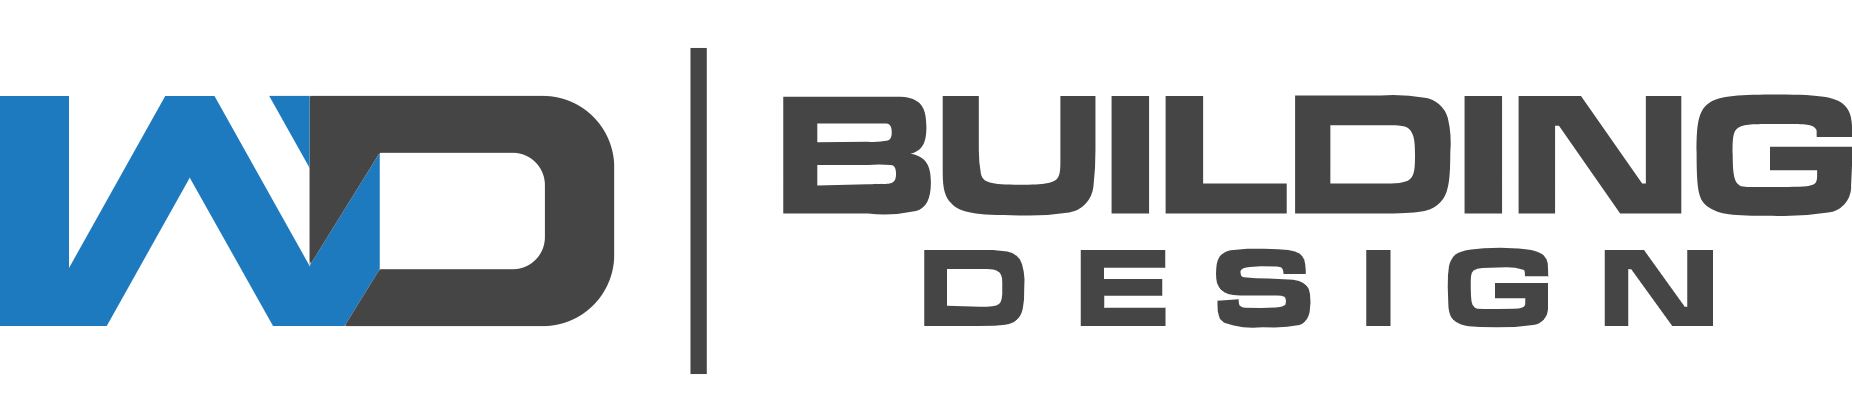 WD Building Design logo